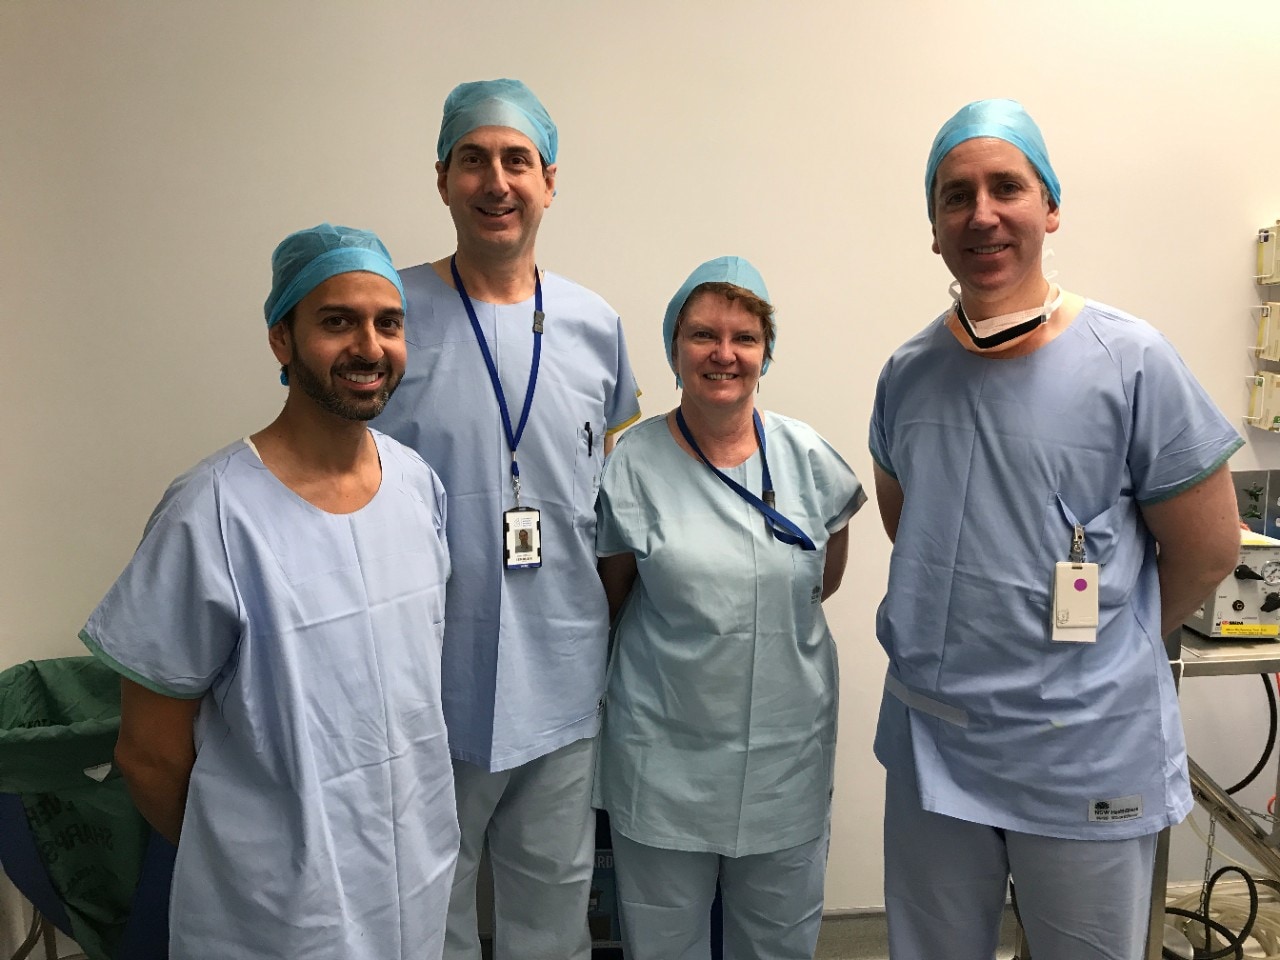 The leadership team Professors Robyn Jamieson and John Grigg (centre) with the surgeons Dr Gaurav Bhardwaj and Associate Prof Matthew Simunovic and 